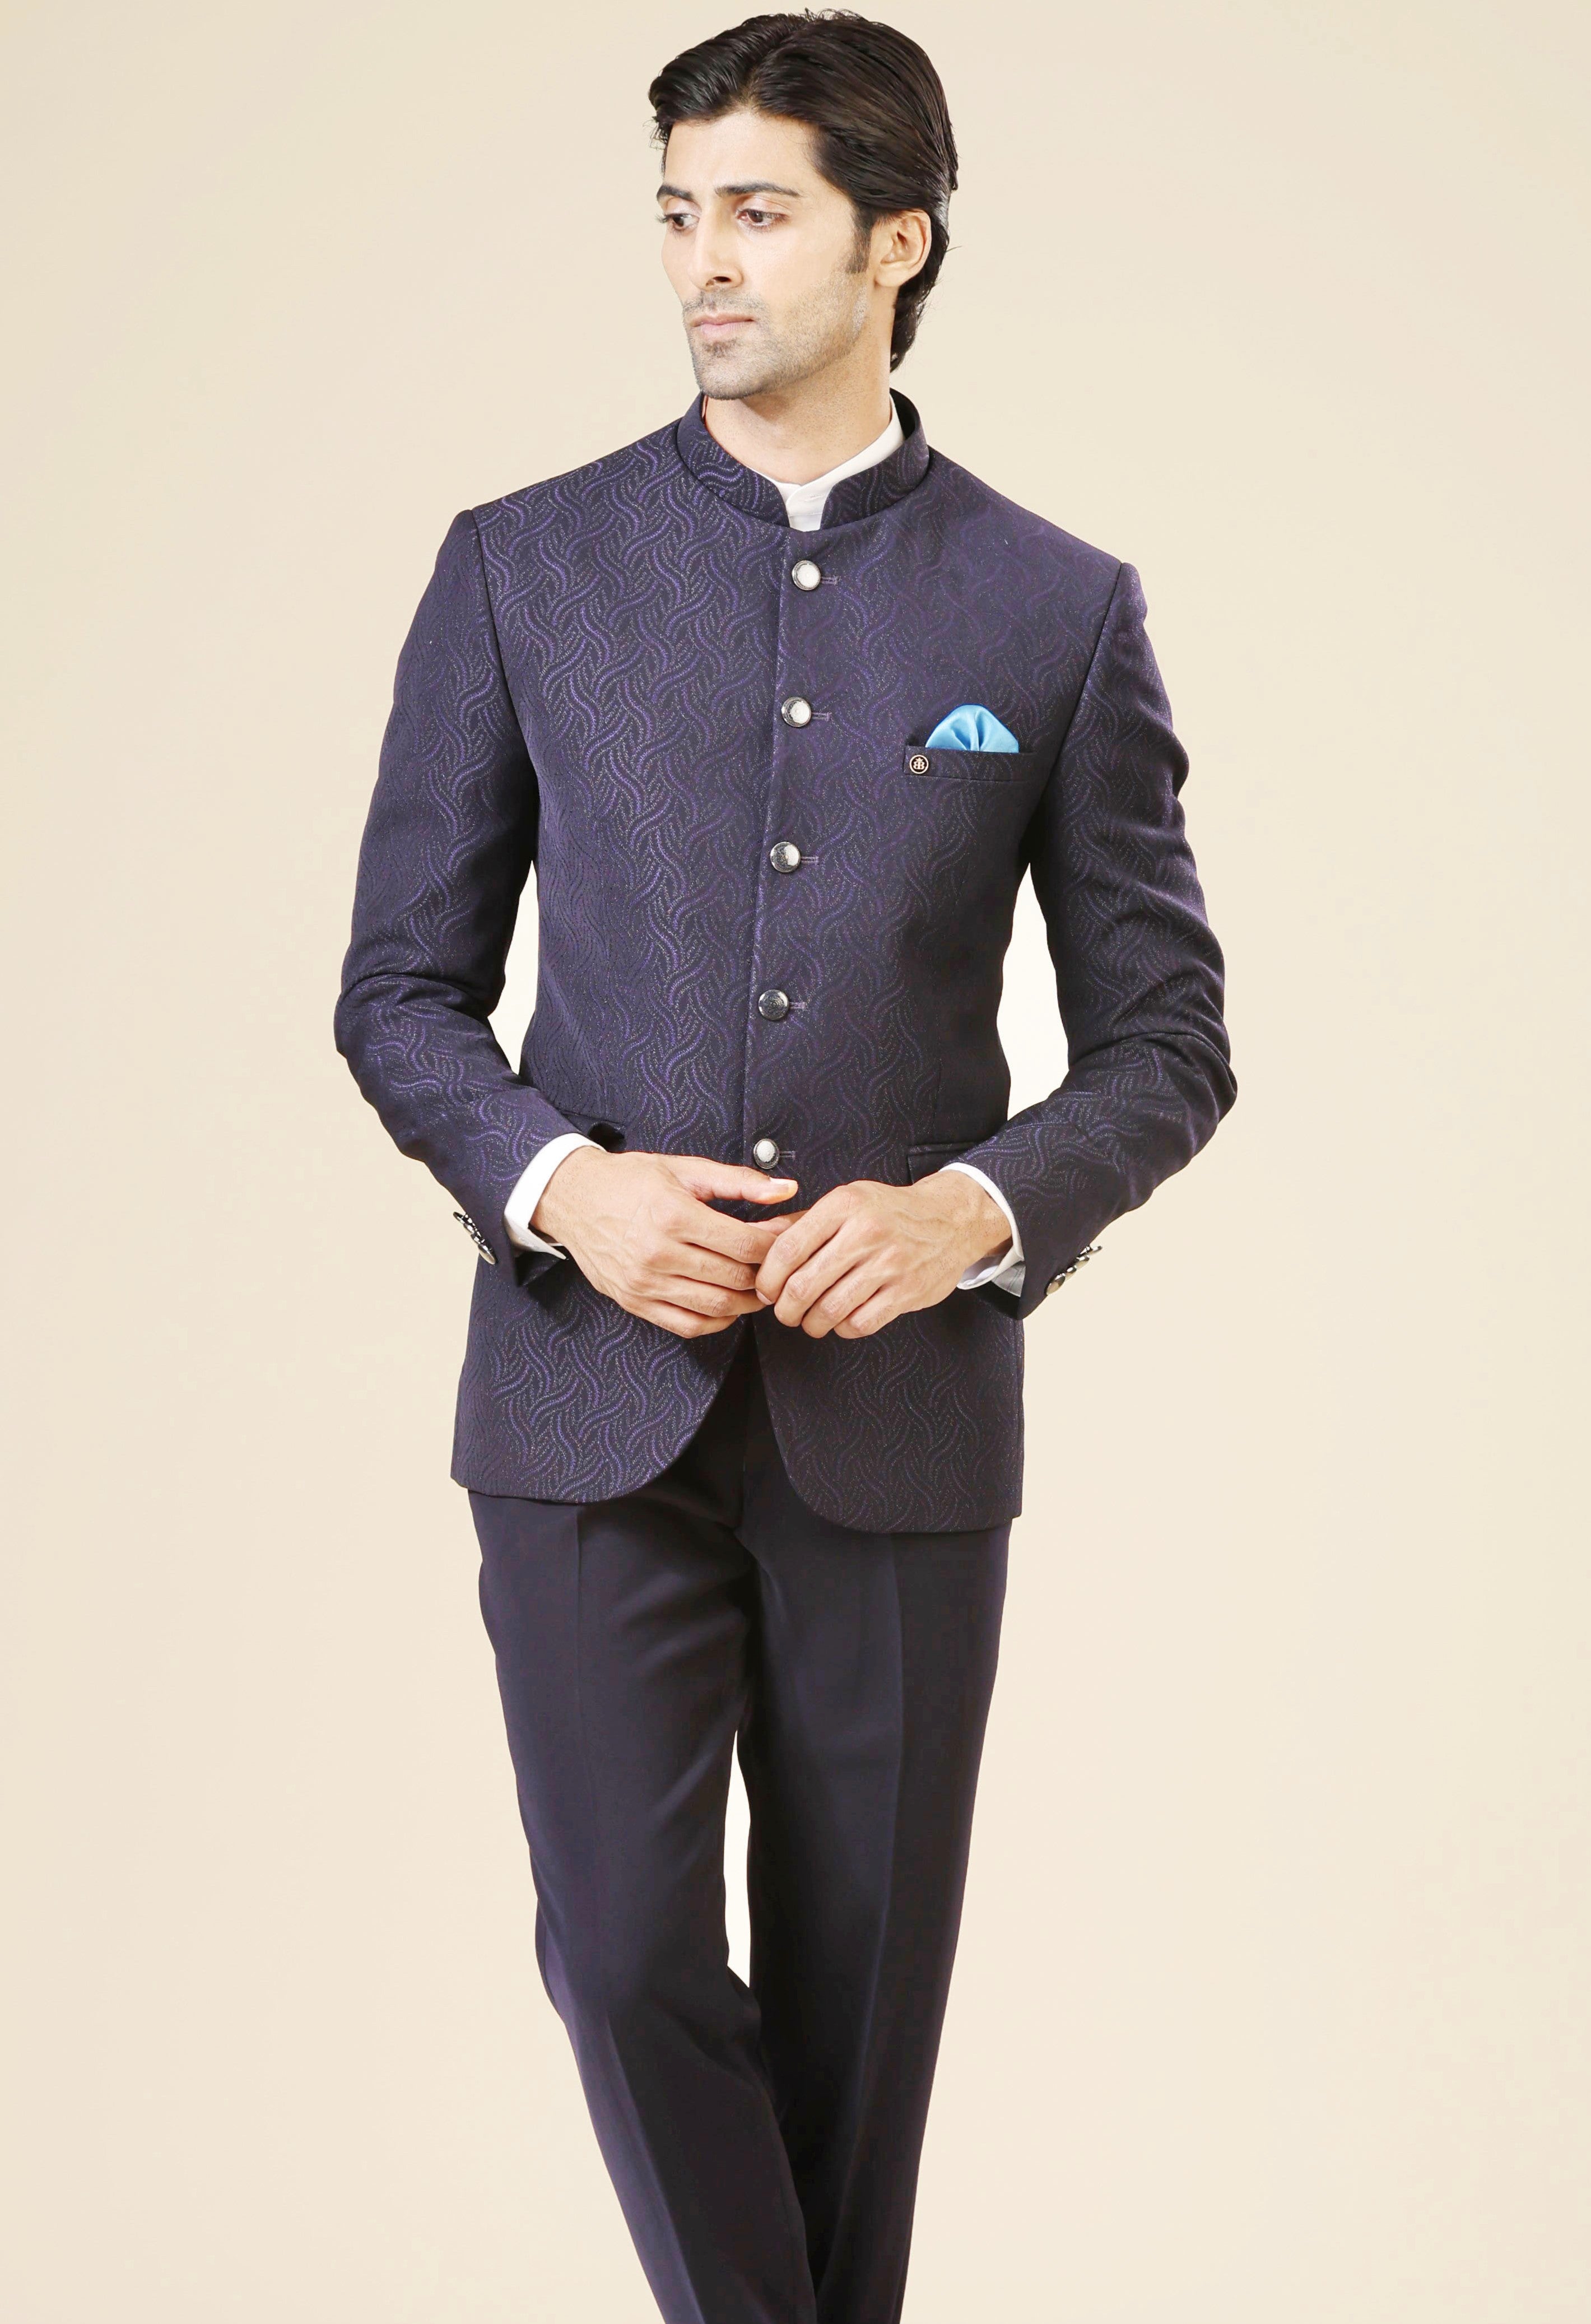 blue bandhgala suit for men